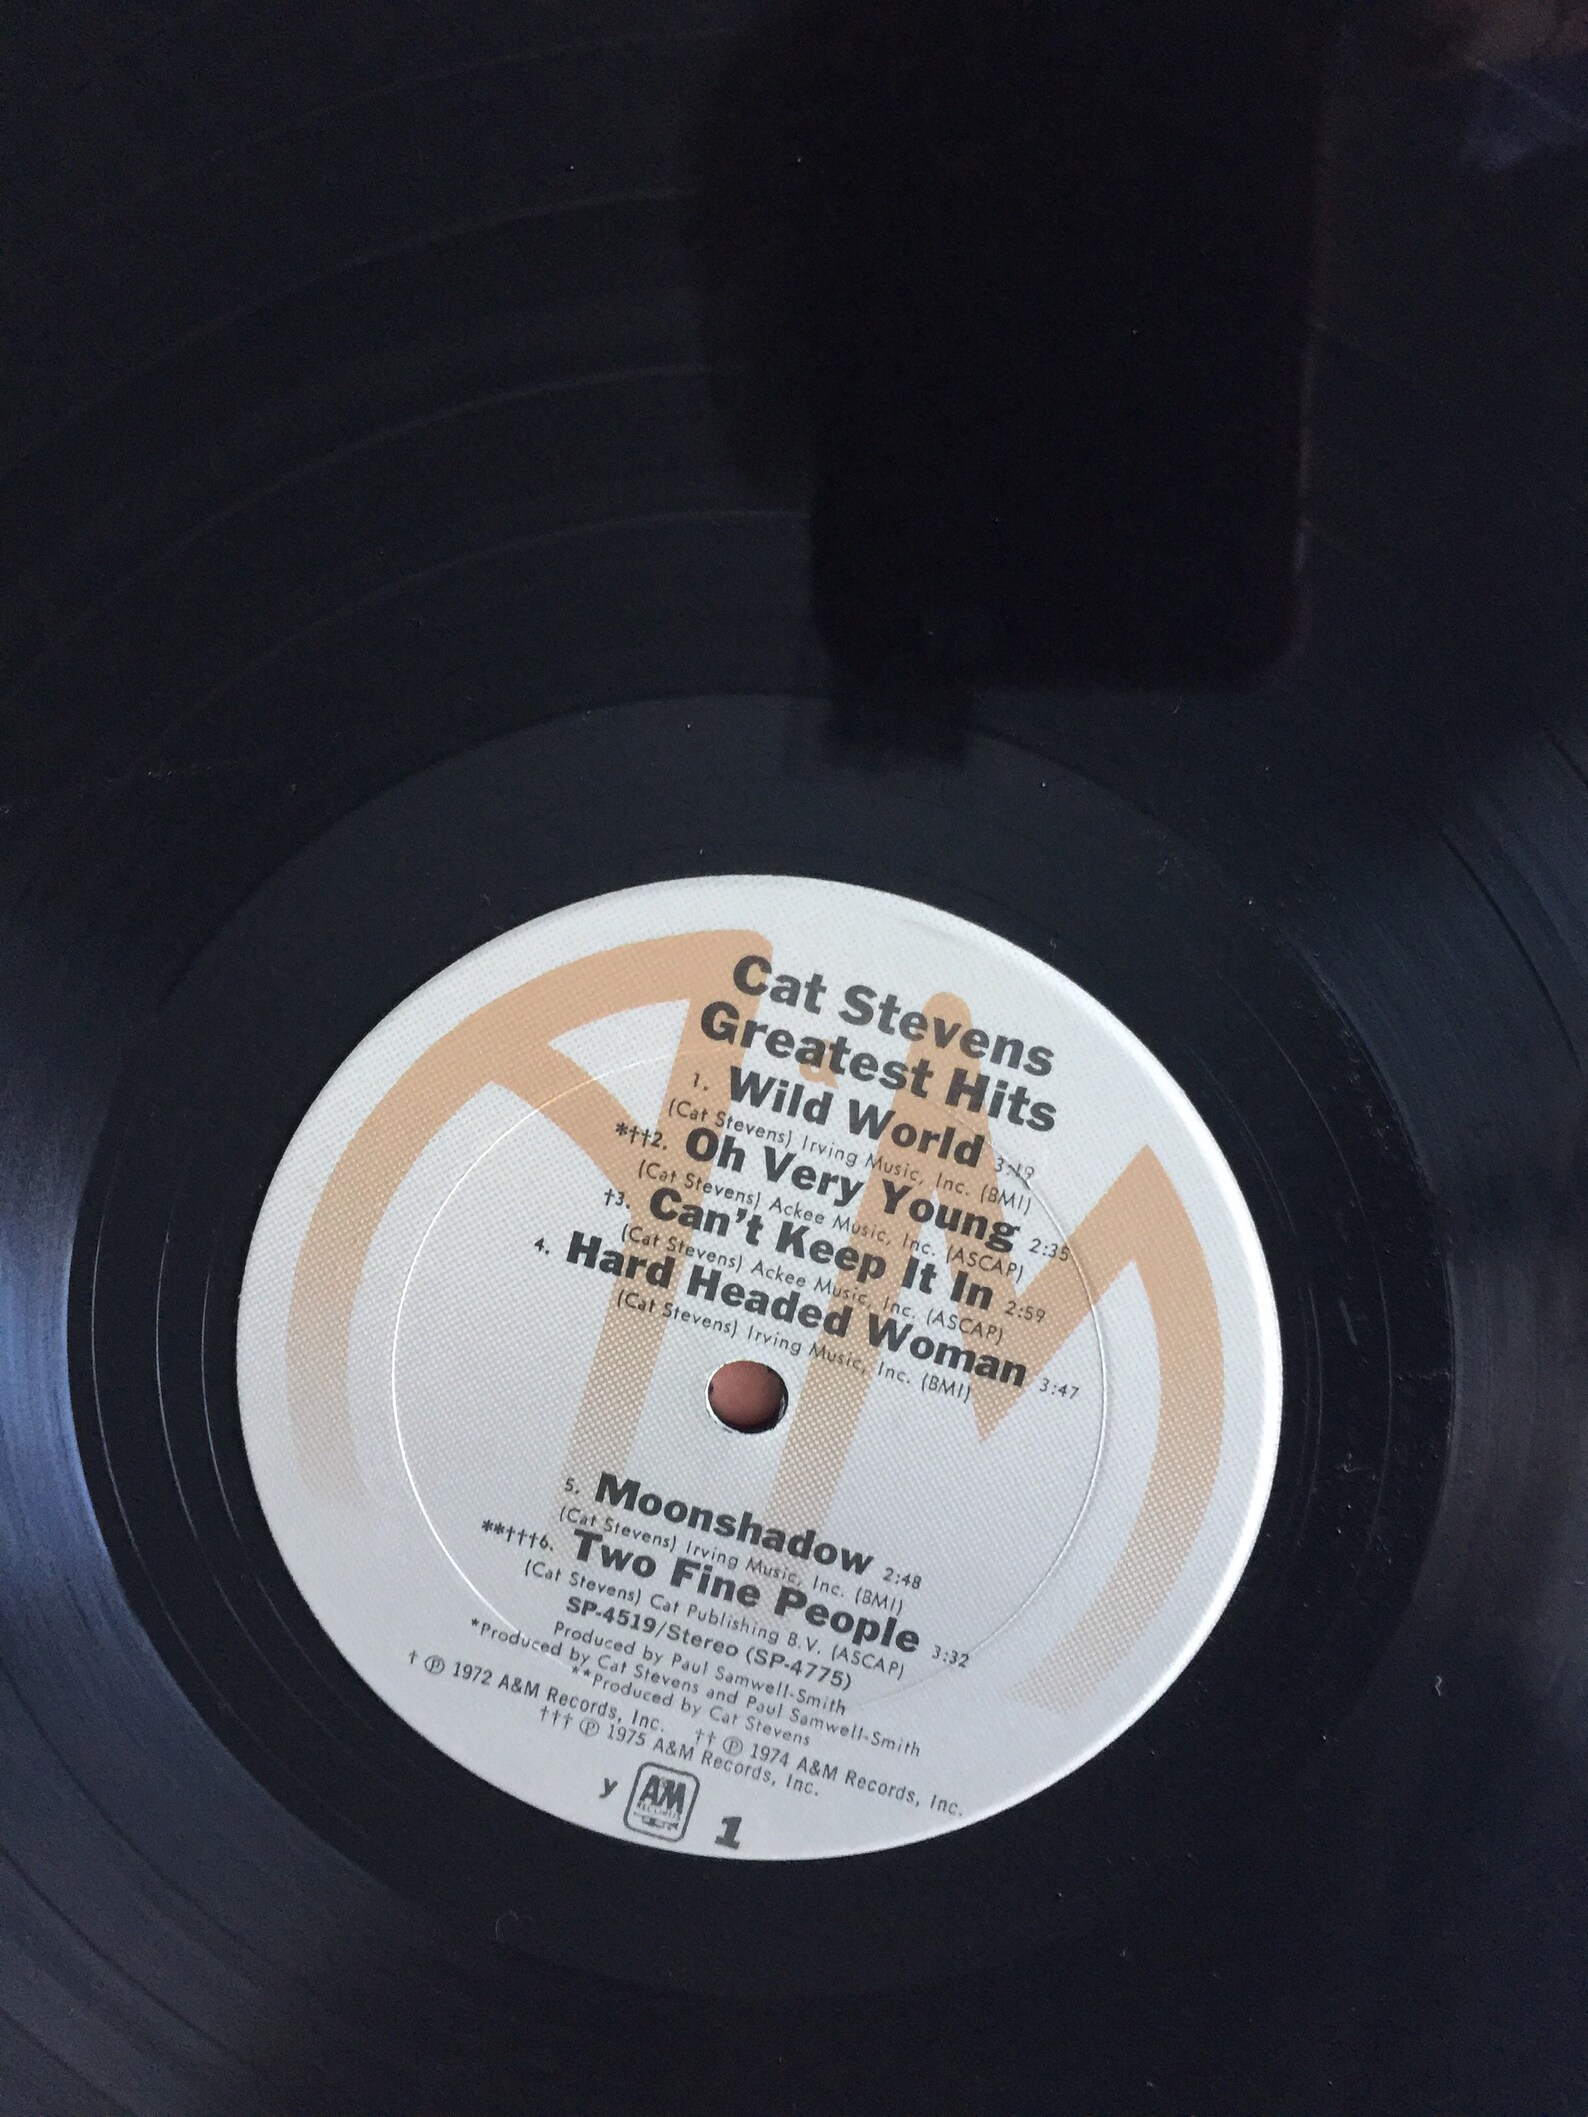 Vintage Cat Stevens Greatest Hits Vinyl LP Record Album 1974 Etsy